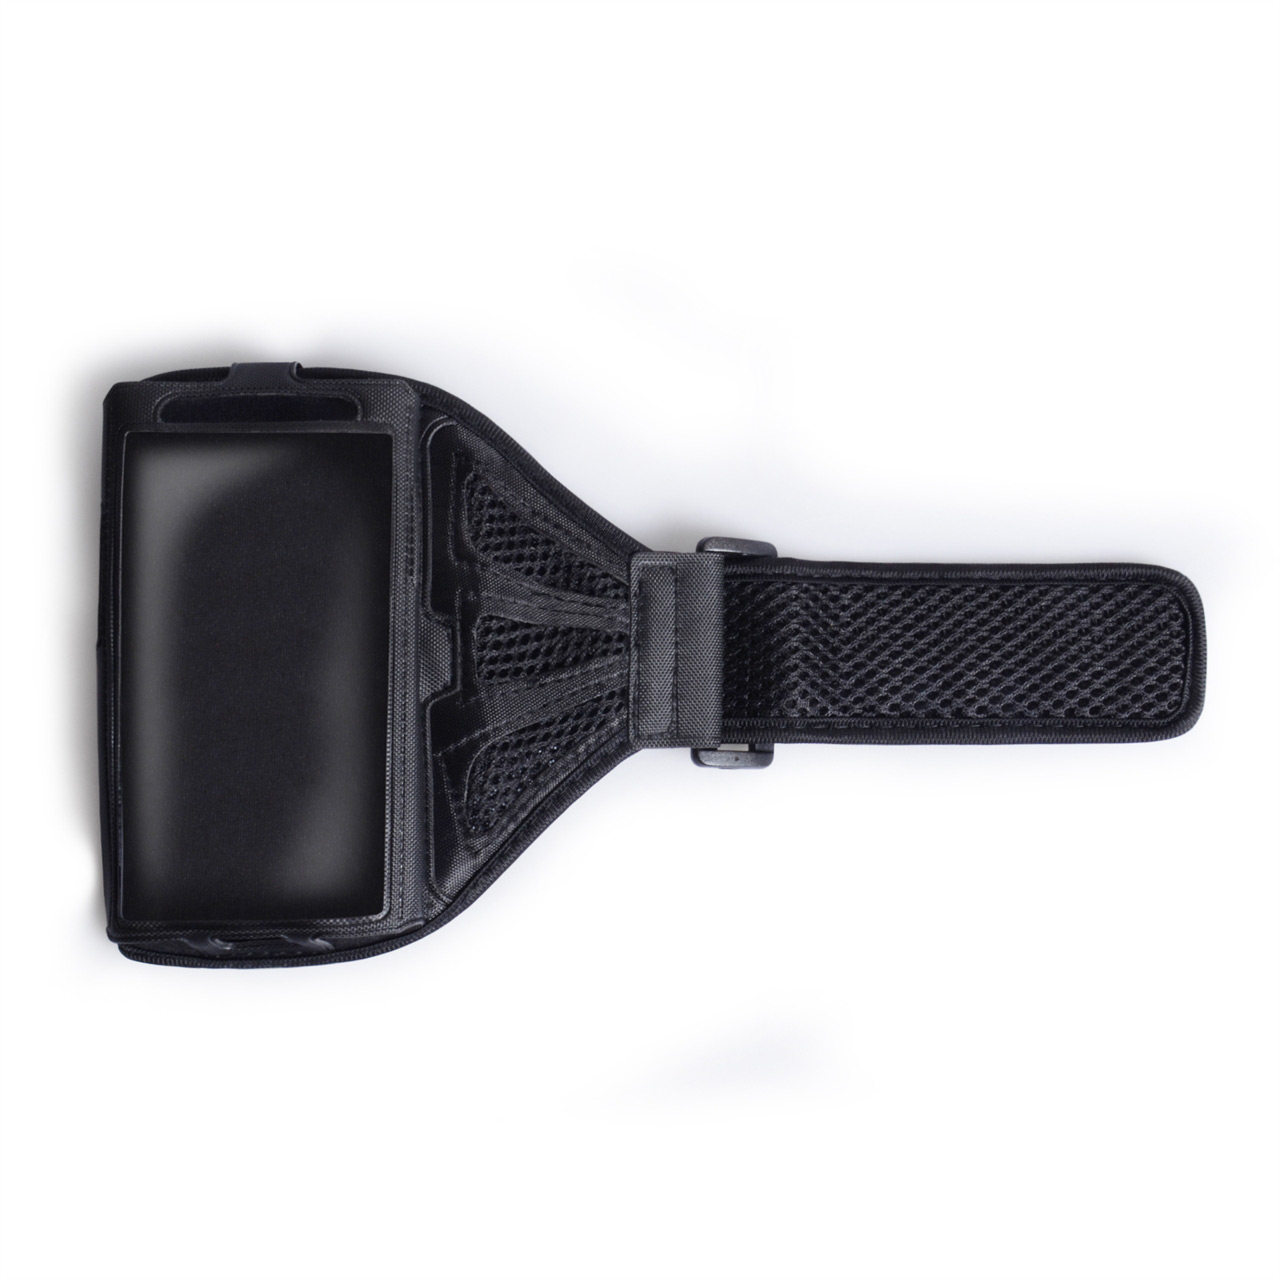 YouSave Accessories Medium Sports Armband - Black